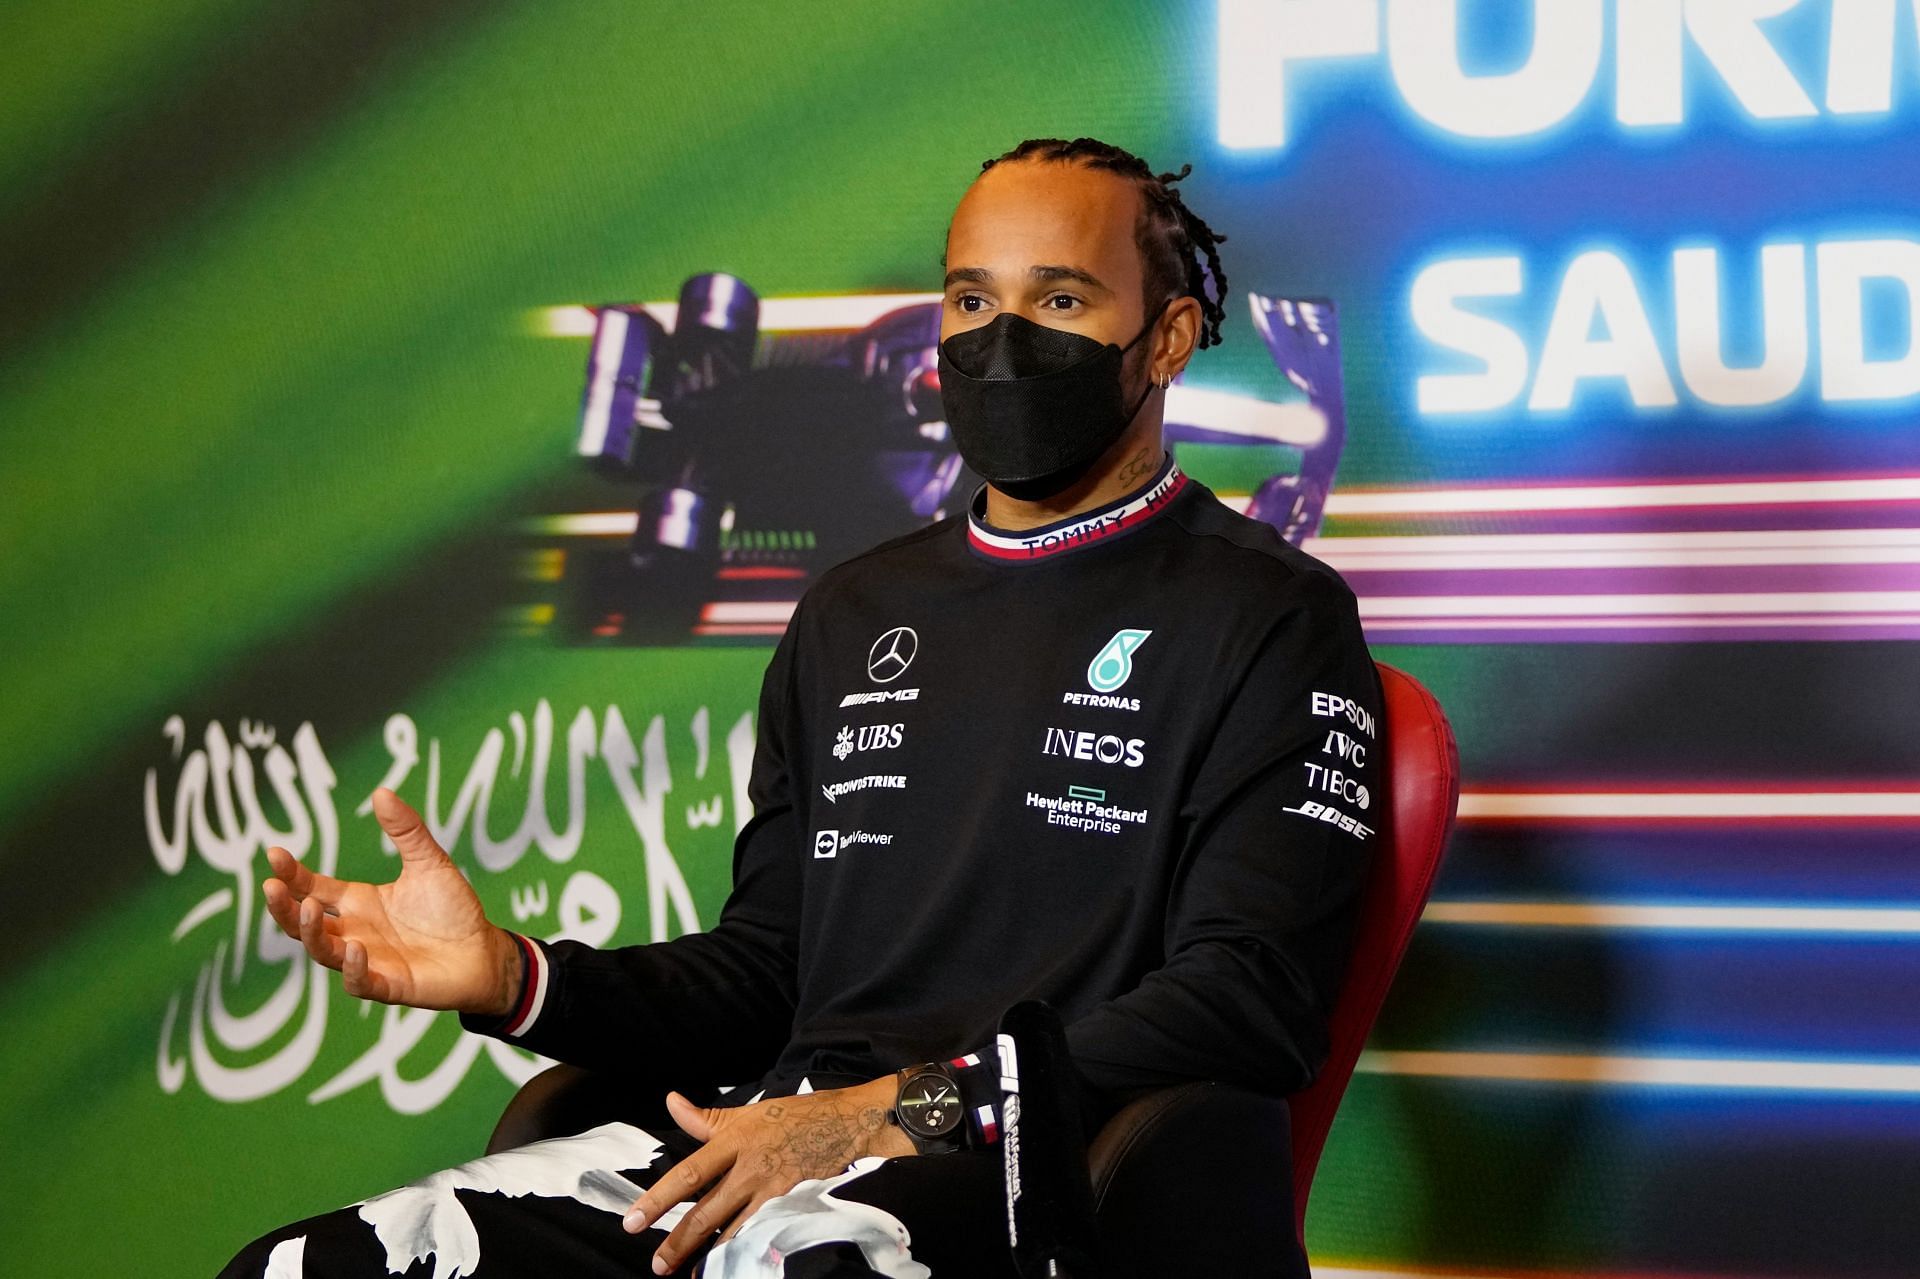 Lewis Hamilton during F1 Grand Prix of Saudi Arabia - Previews